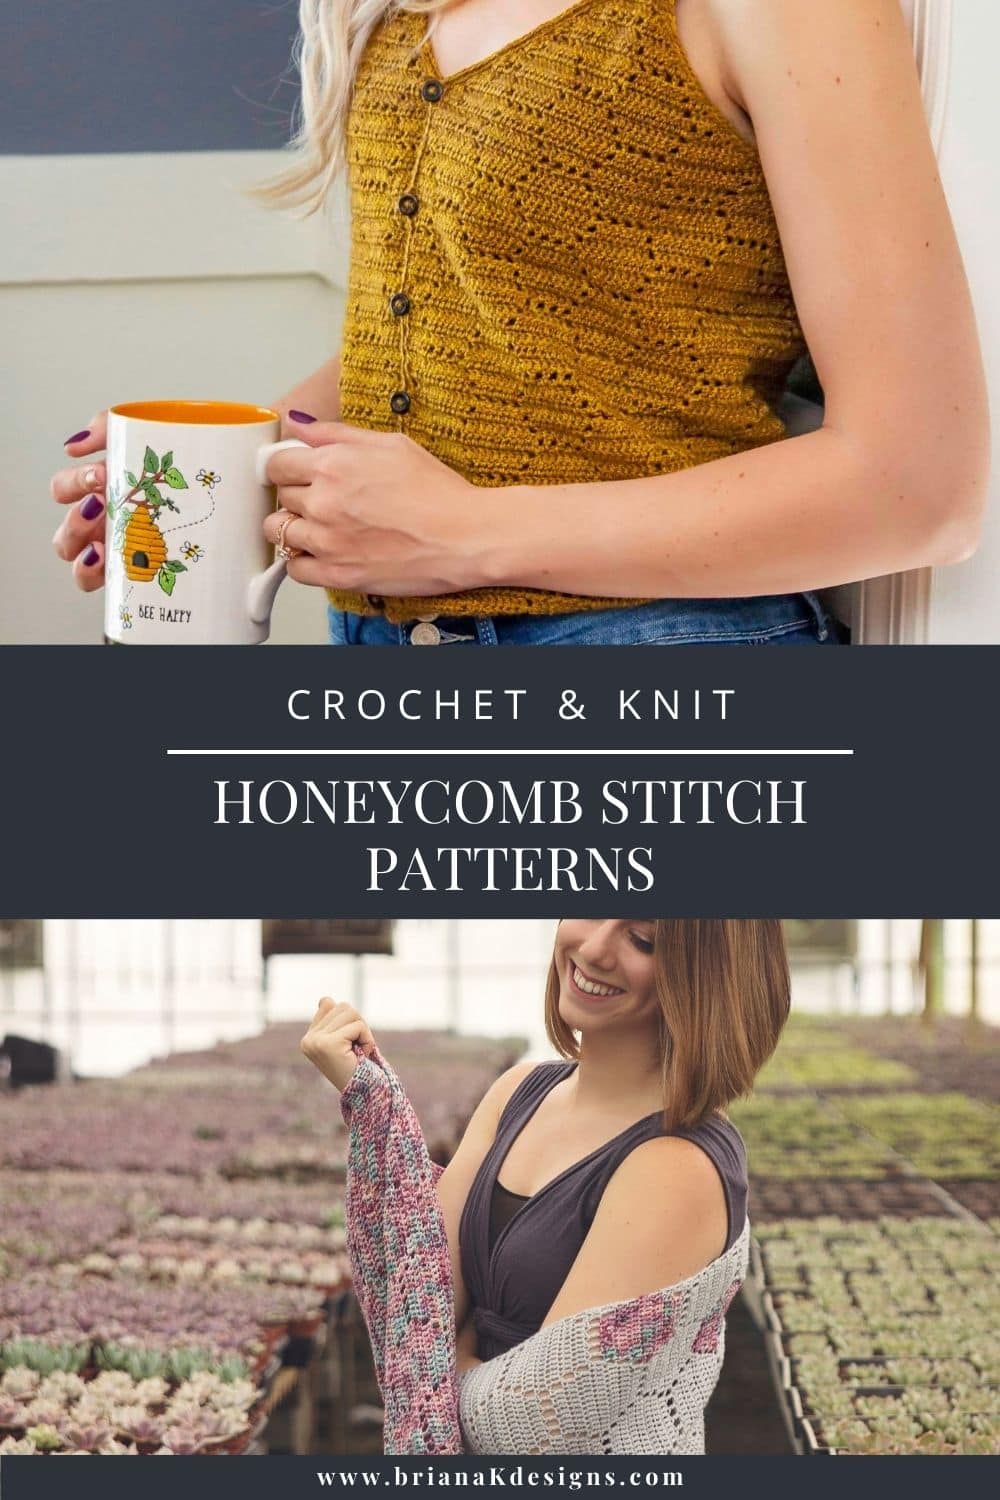 Knit and Crochet Honeycomb Stitch Patterns